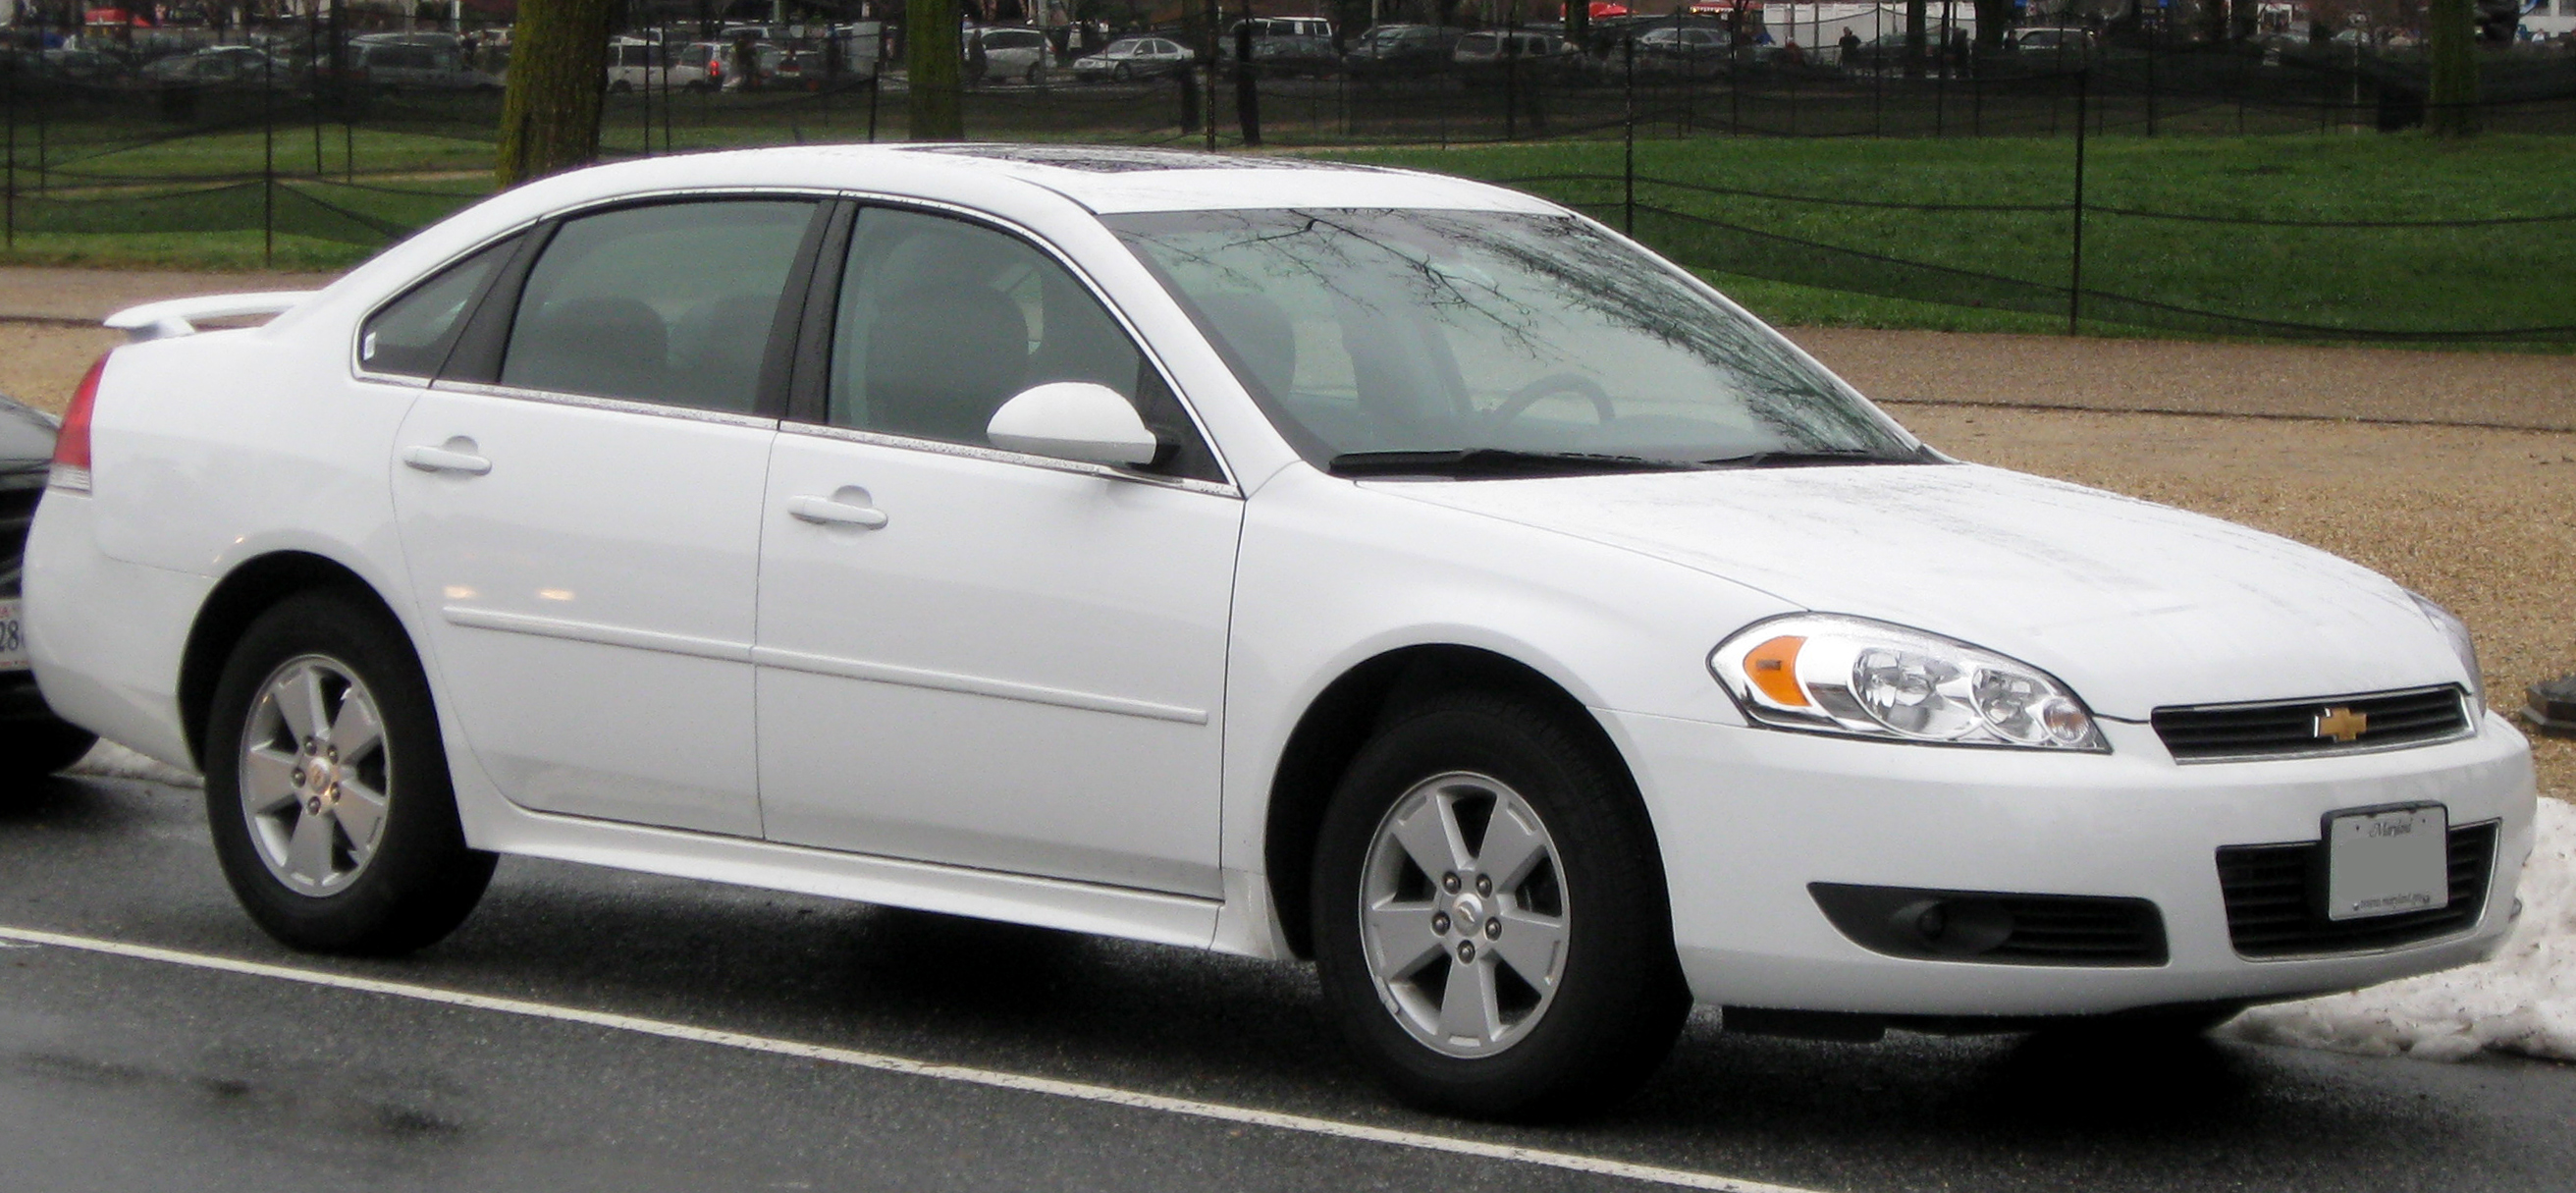 File:Chevrolet Impala -- 12-26-2009.jpg - Wikimedia Commons